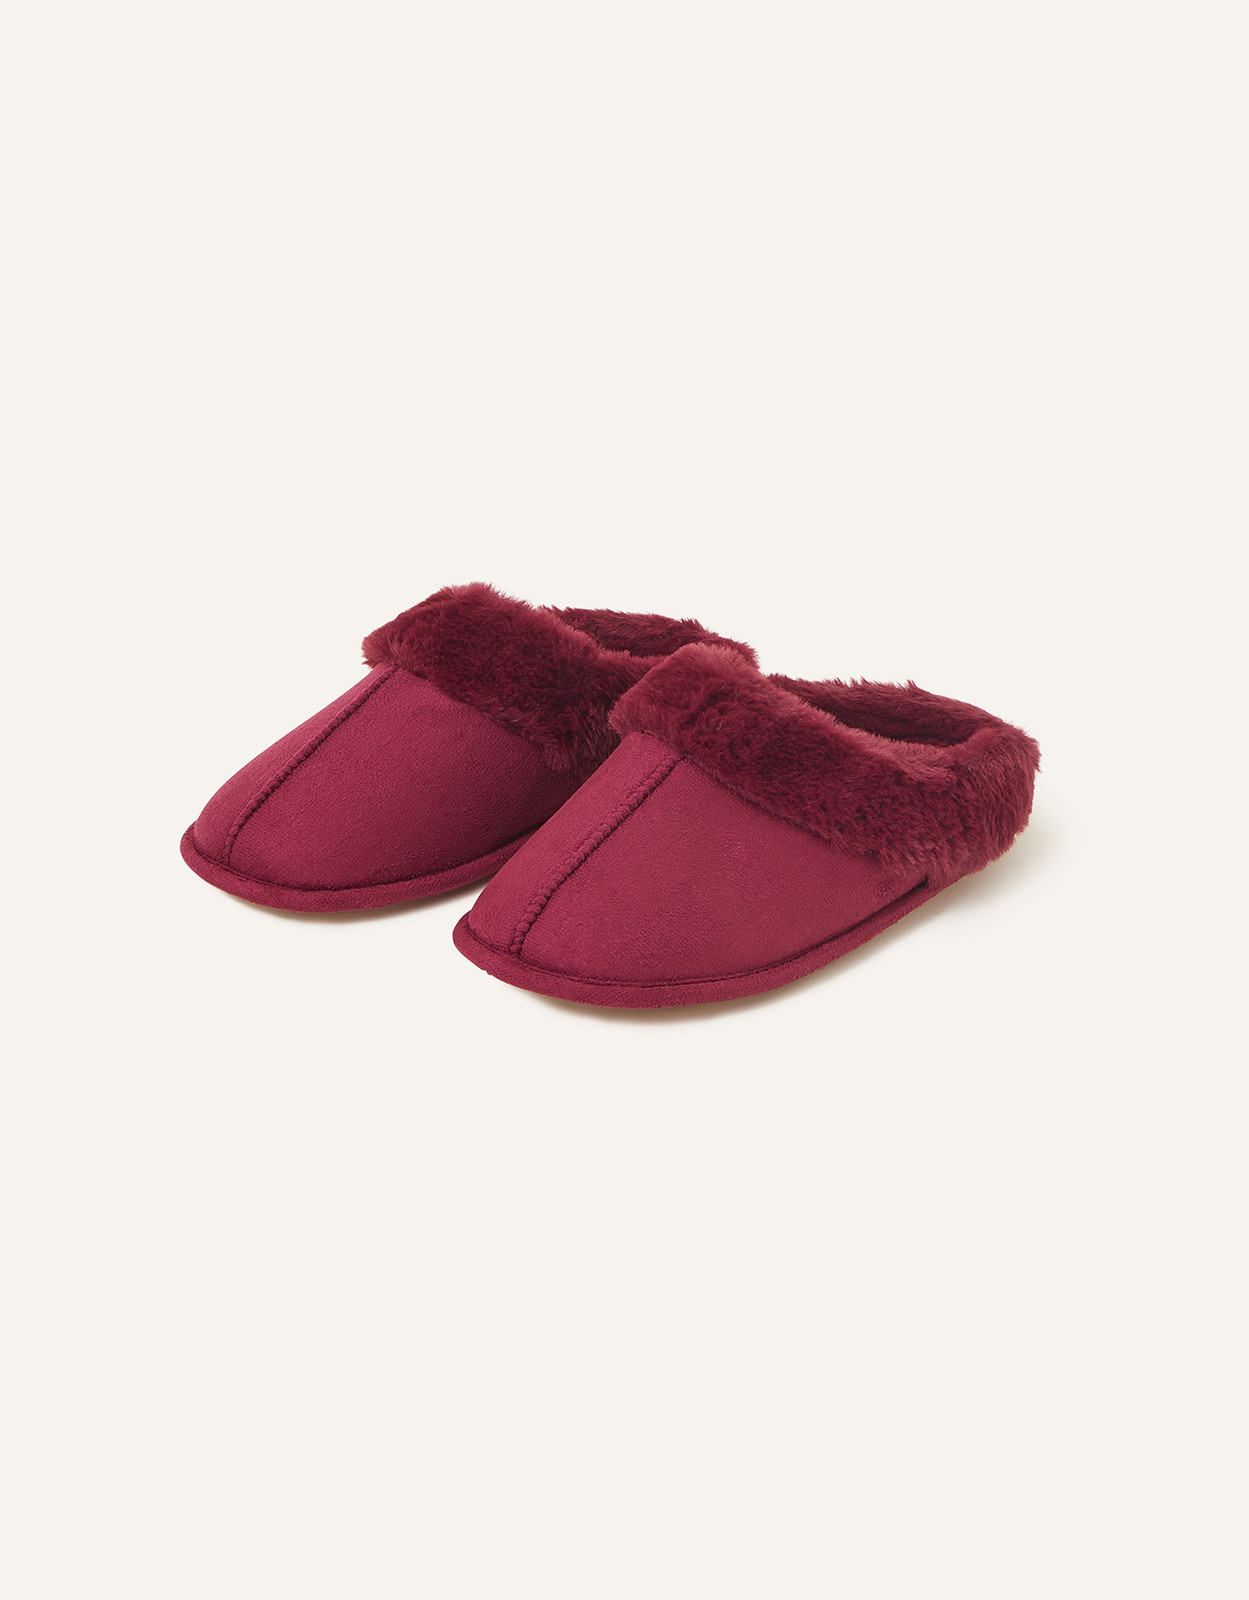 Accessorize Women's Faux Fur Mule Slippers Red, Size: XL